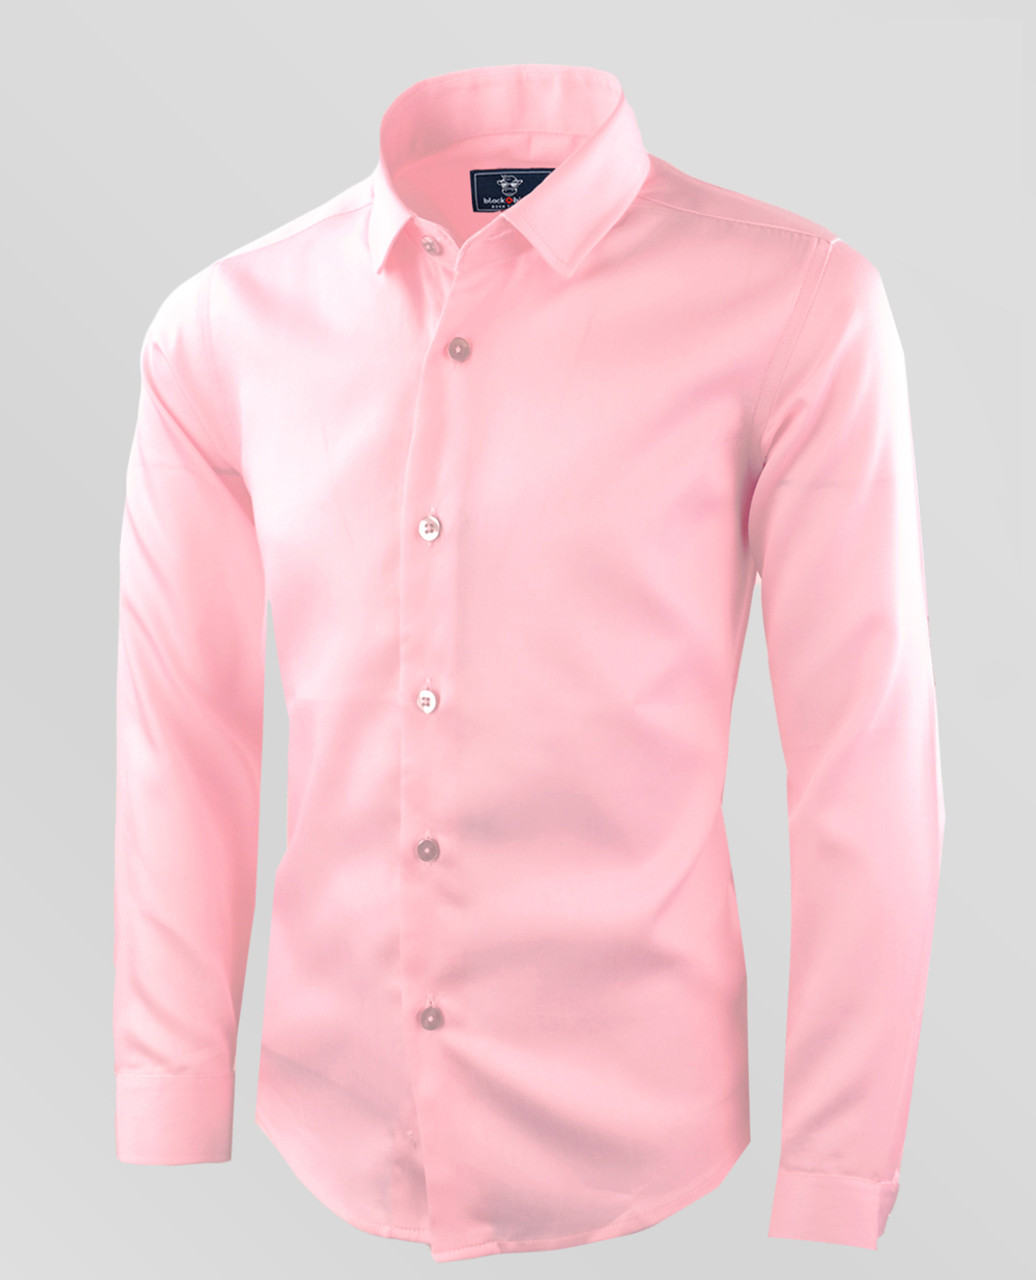 pink dress shirt for baby boy